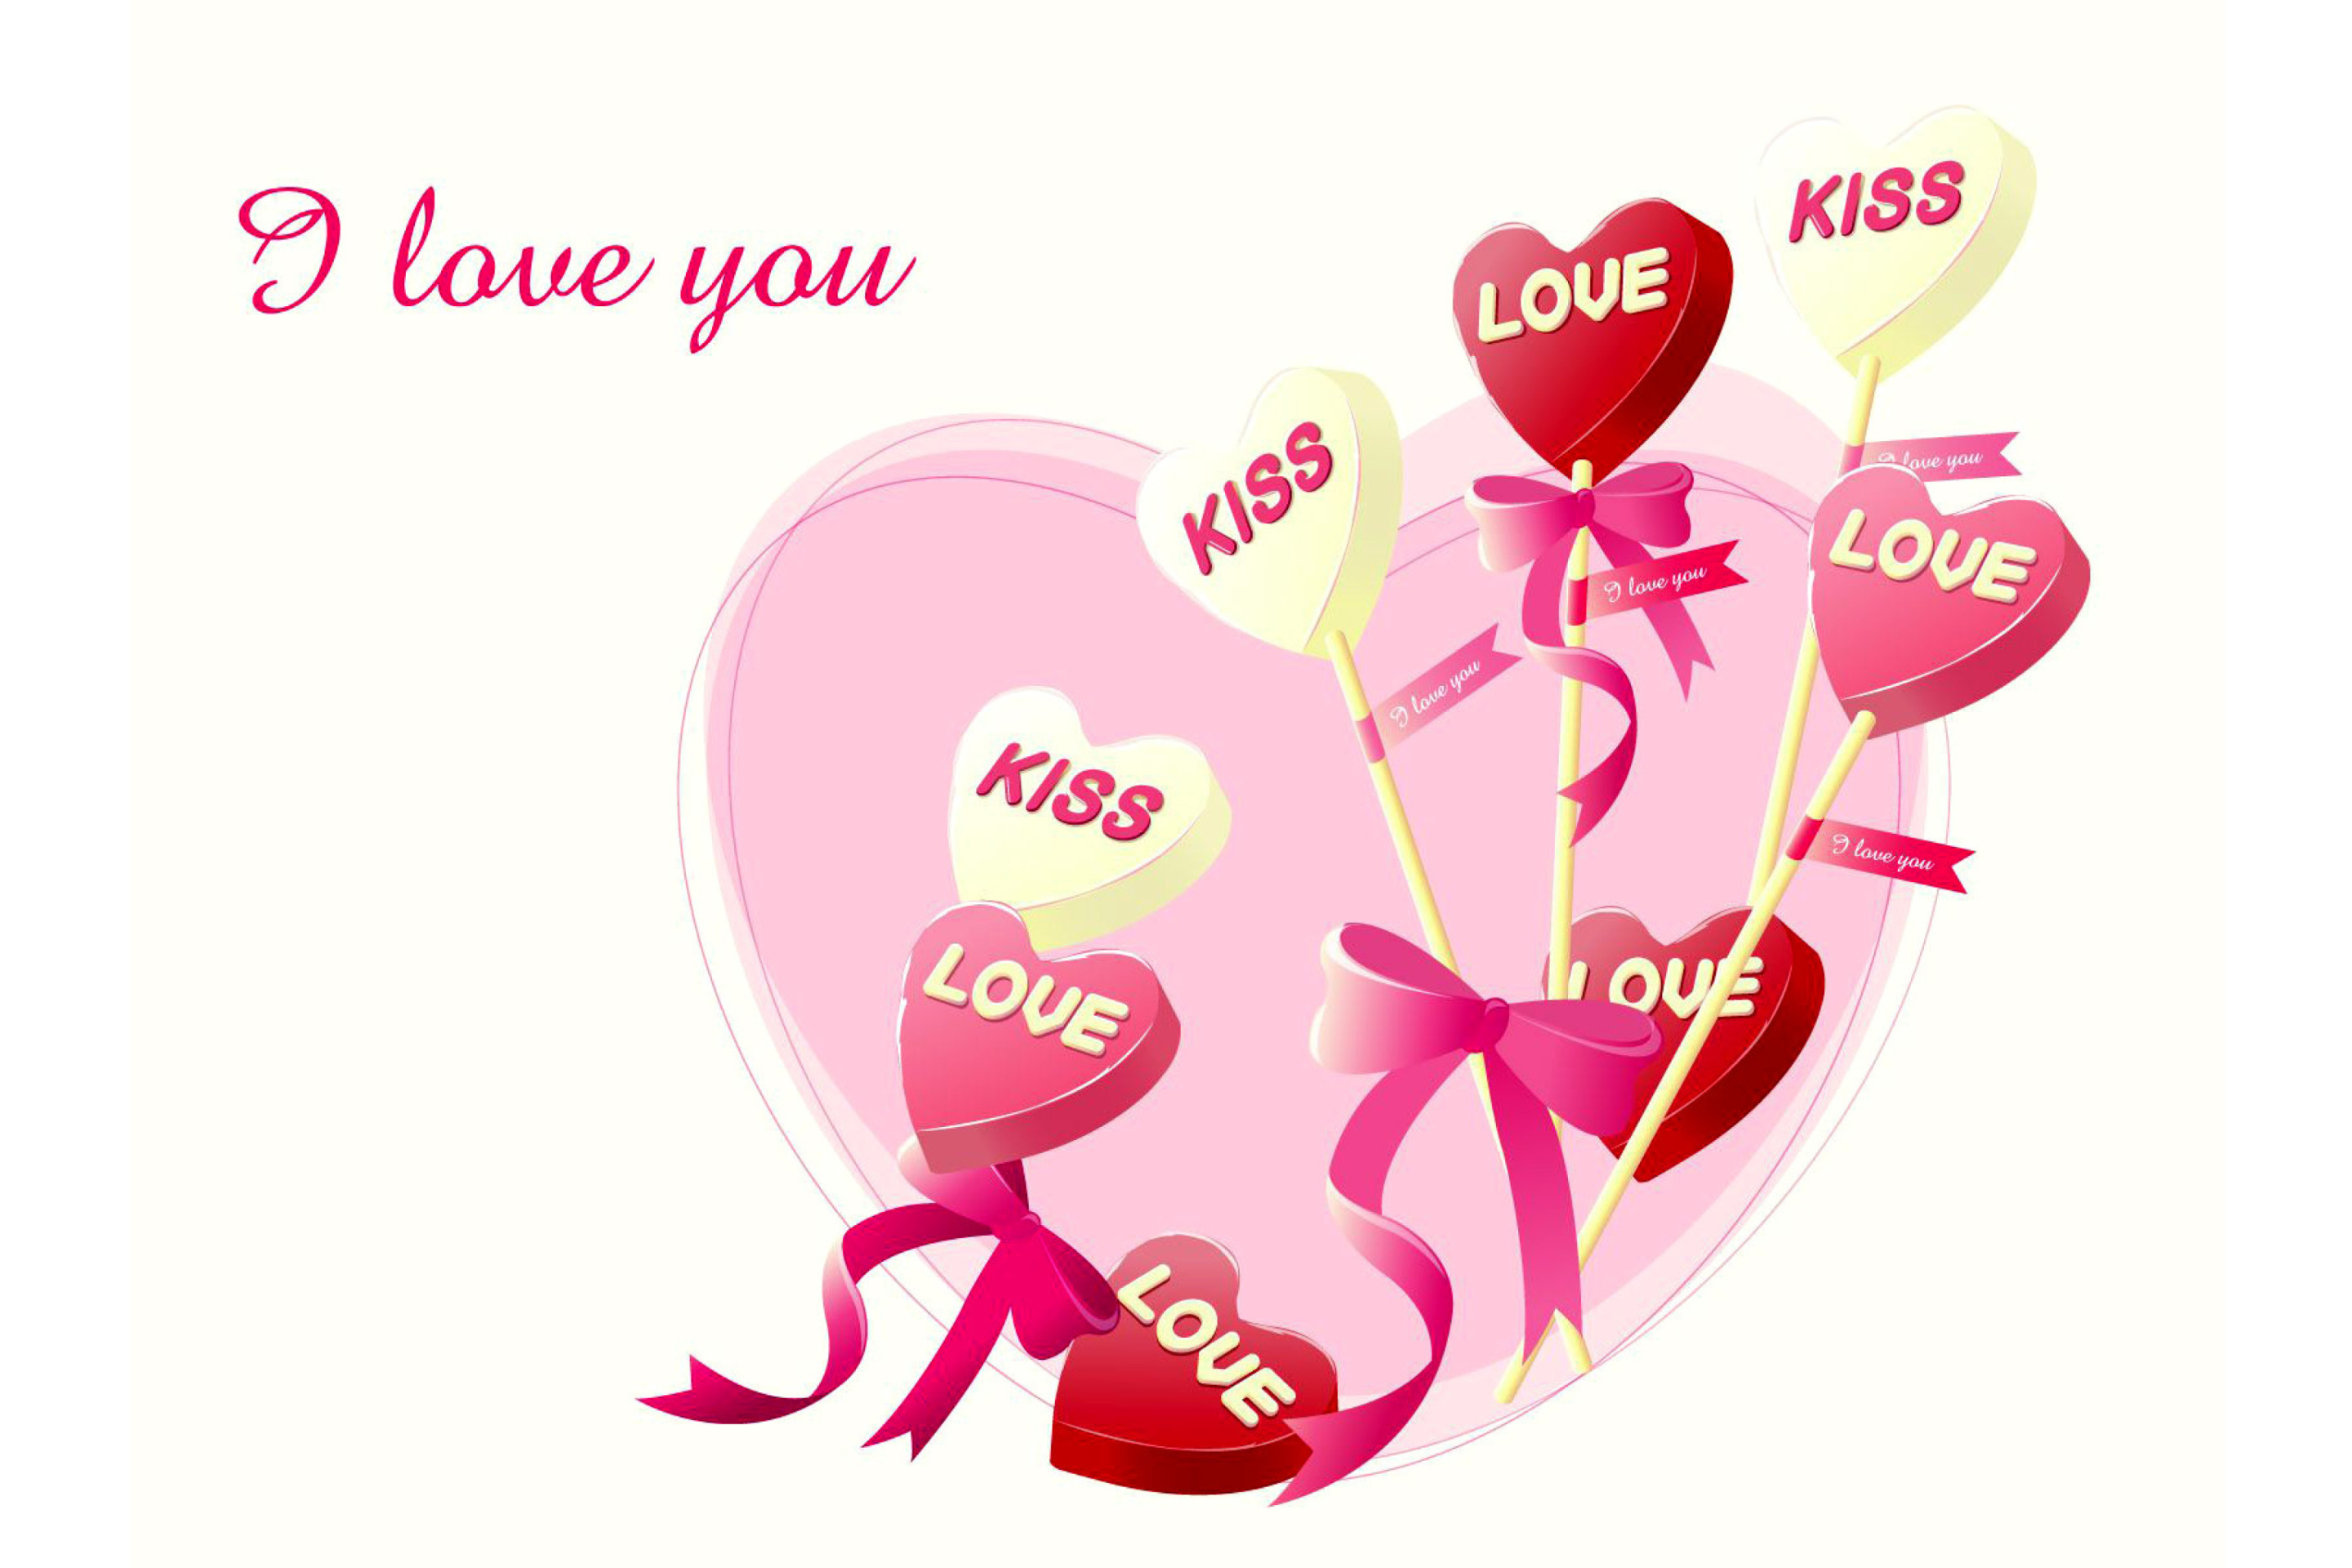 Das I Love You Balloons and Hearts Wallpaper 2880x1920